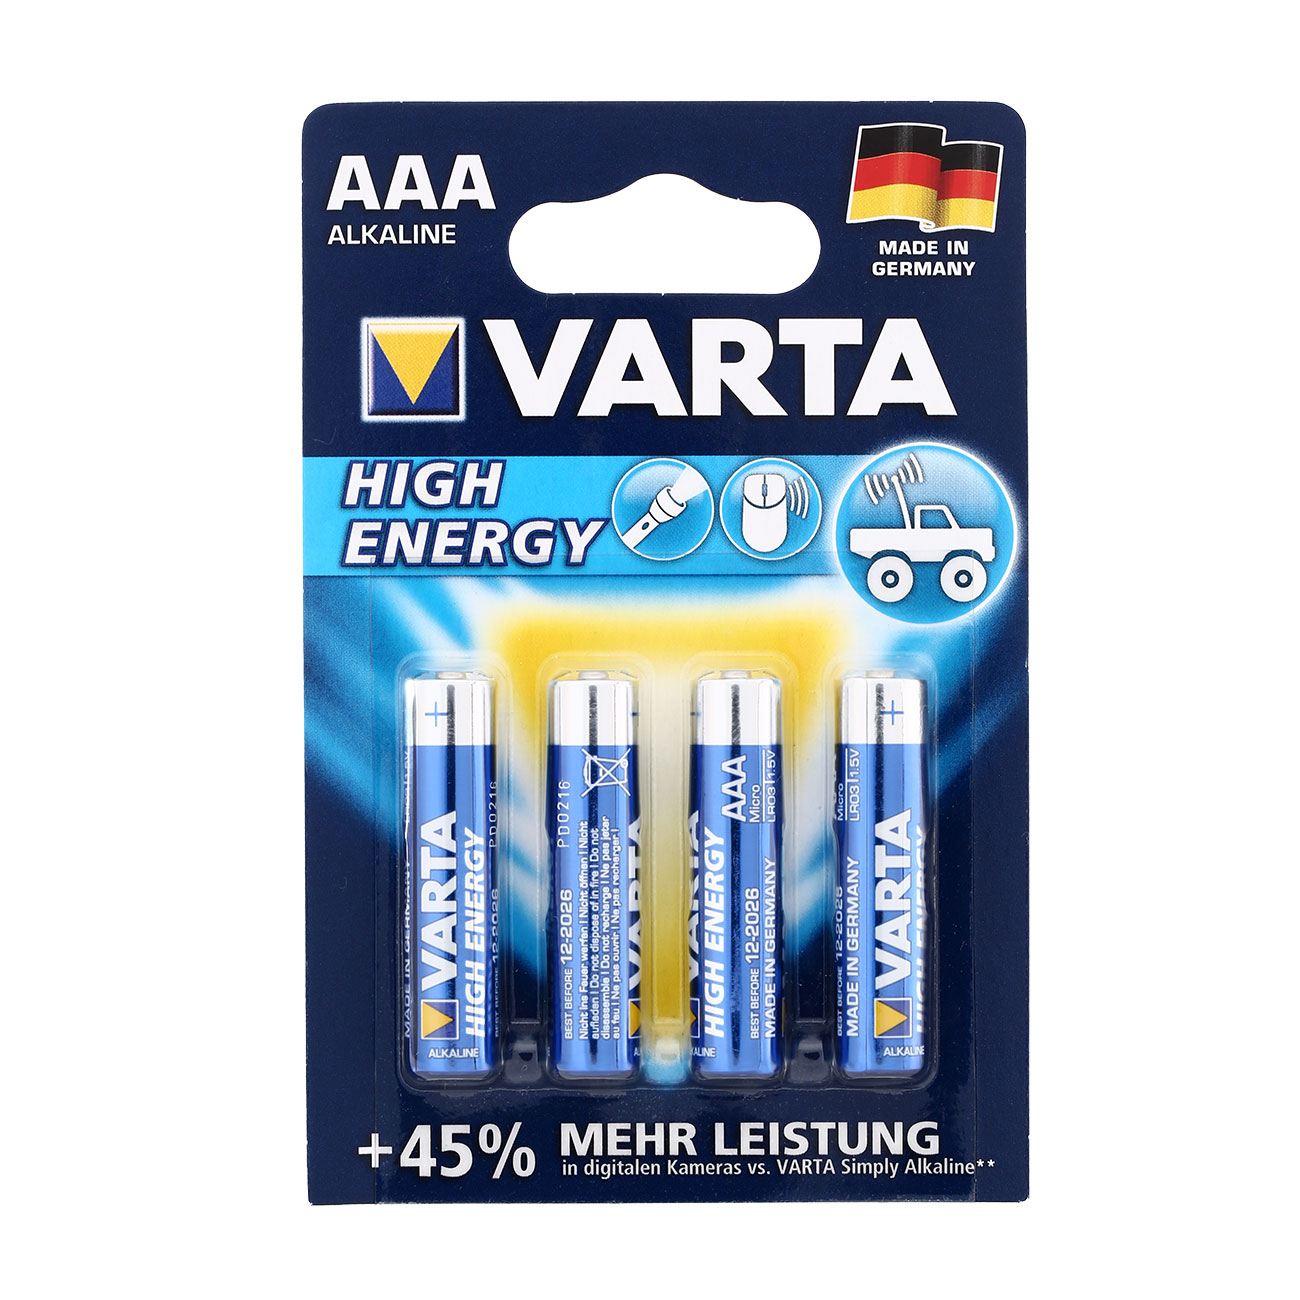 80 x Varta Longlife 4103 AAA LR03 Micro Alkaline Batterie 1,5V in Folie DHL 